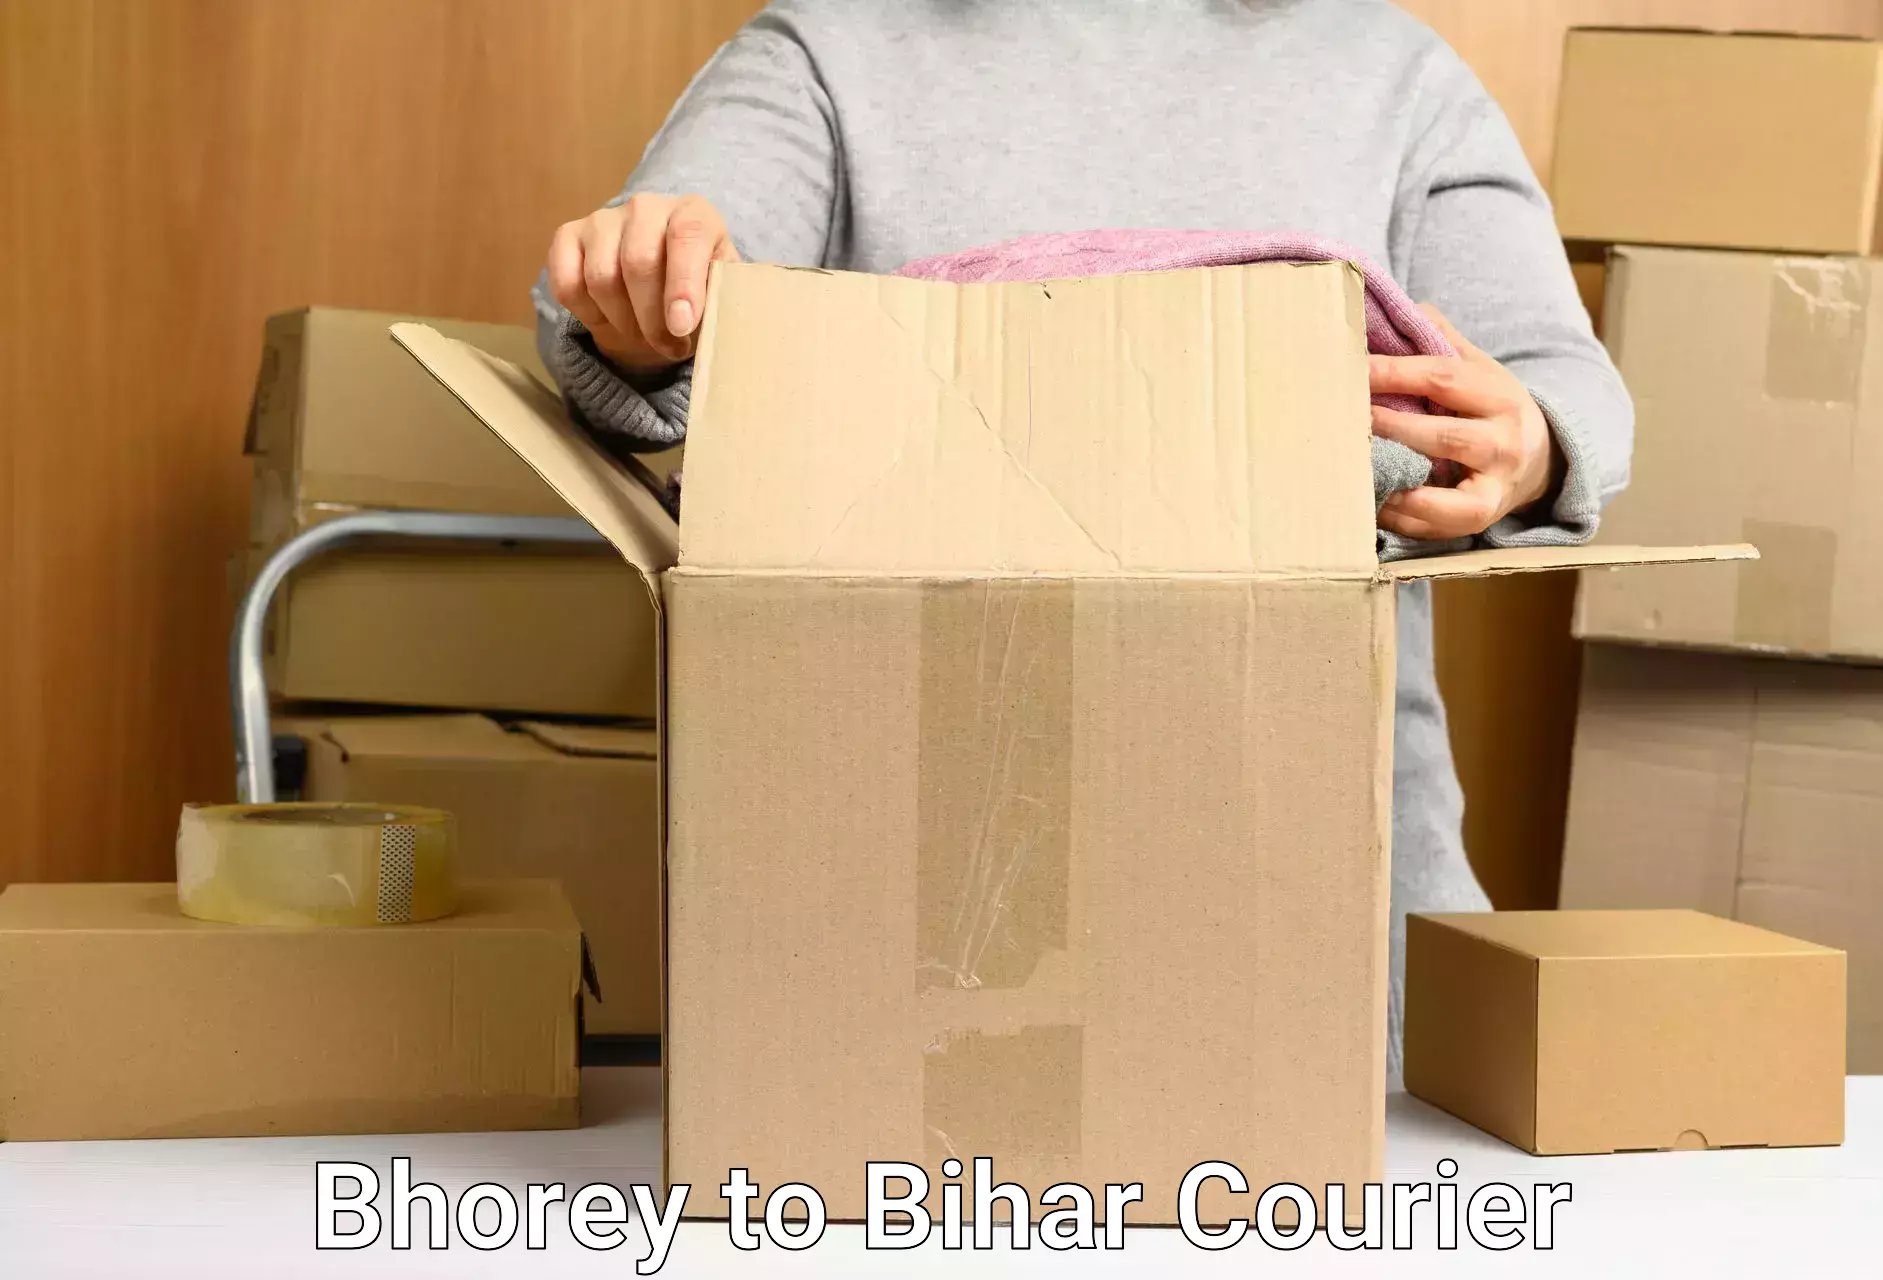 Courier service comparison Bhorey to Madhepura